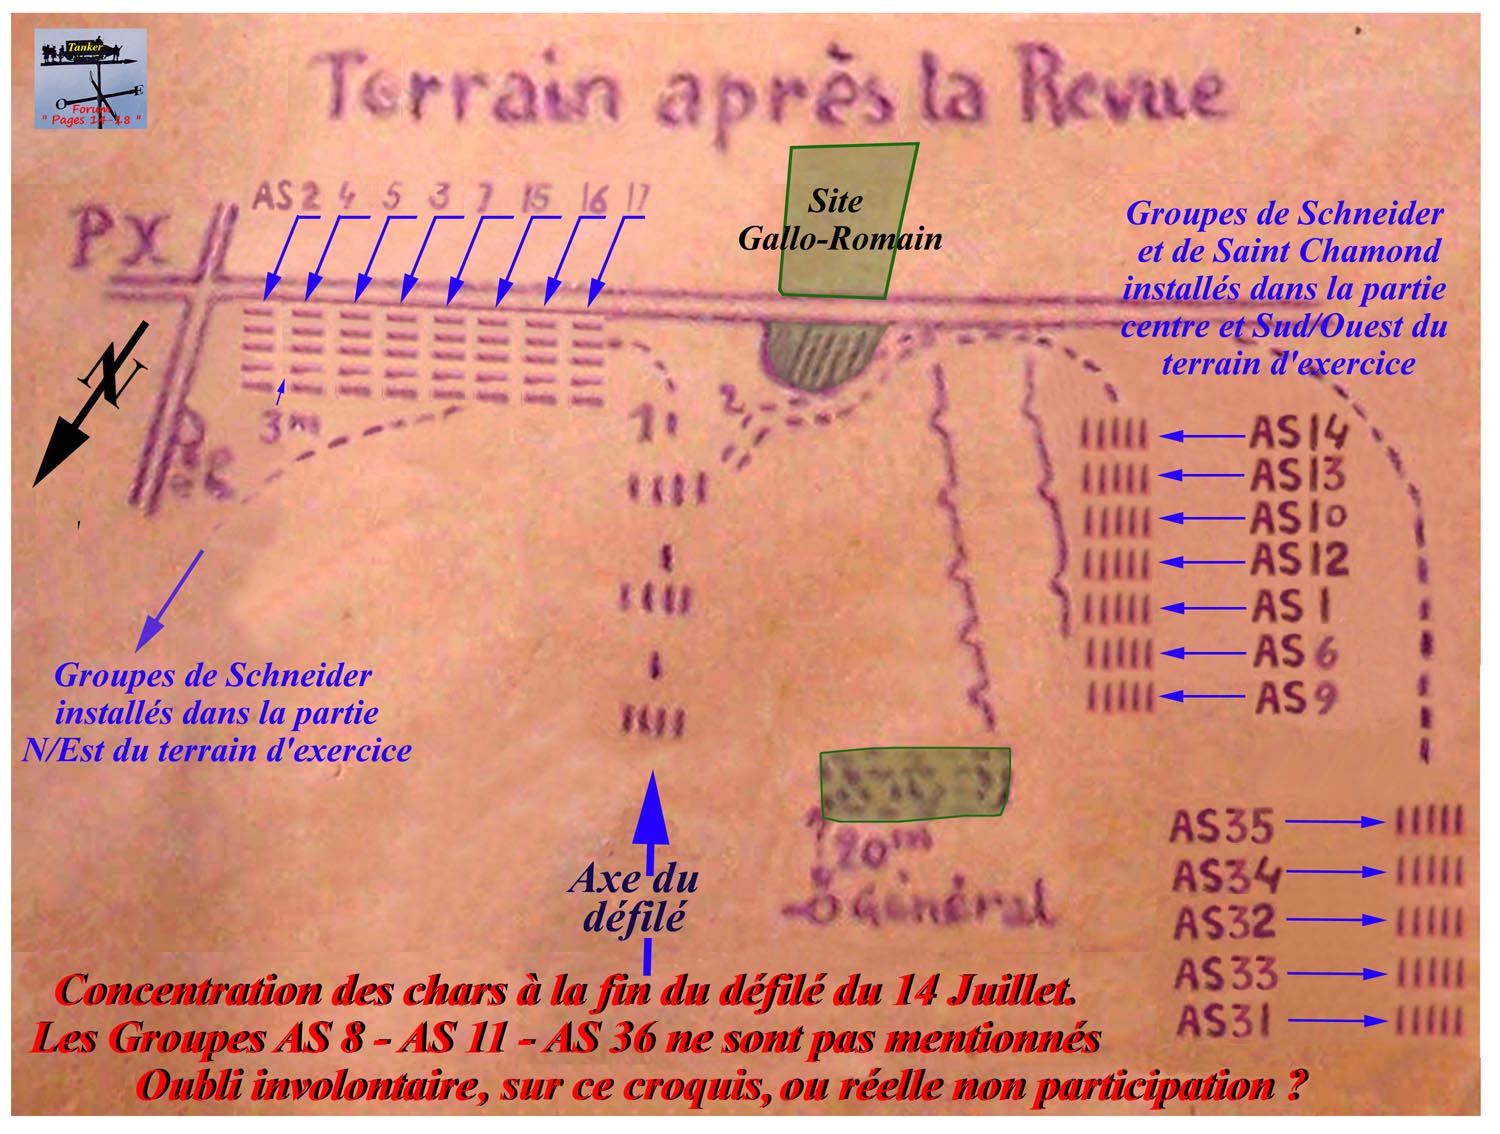 19 - Croquis note Prise d'Armes du 170710 - 16N2136-37 - 19a.jpg